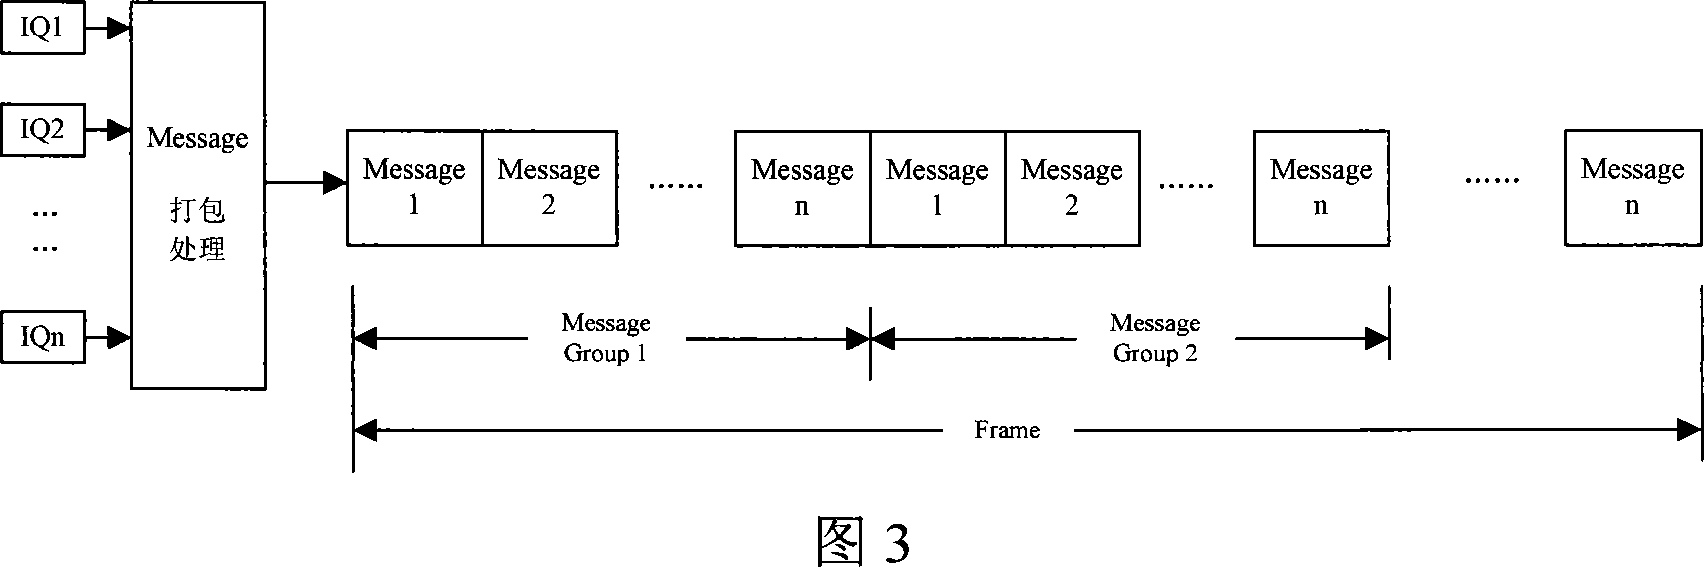 An IQ data transmission method between the BBU and RRU